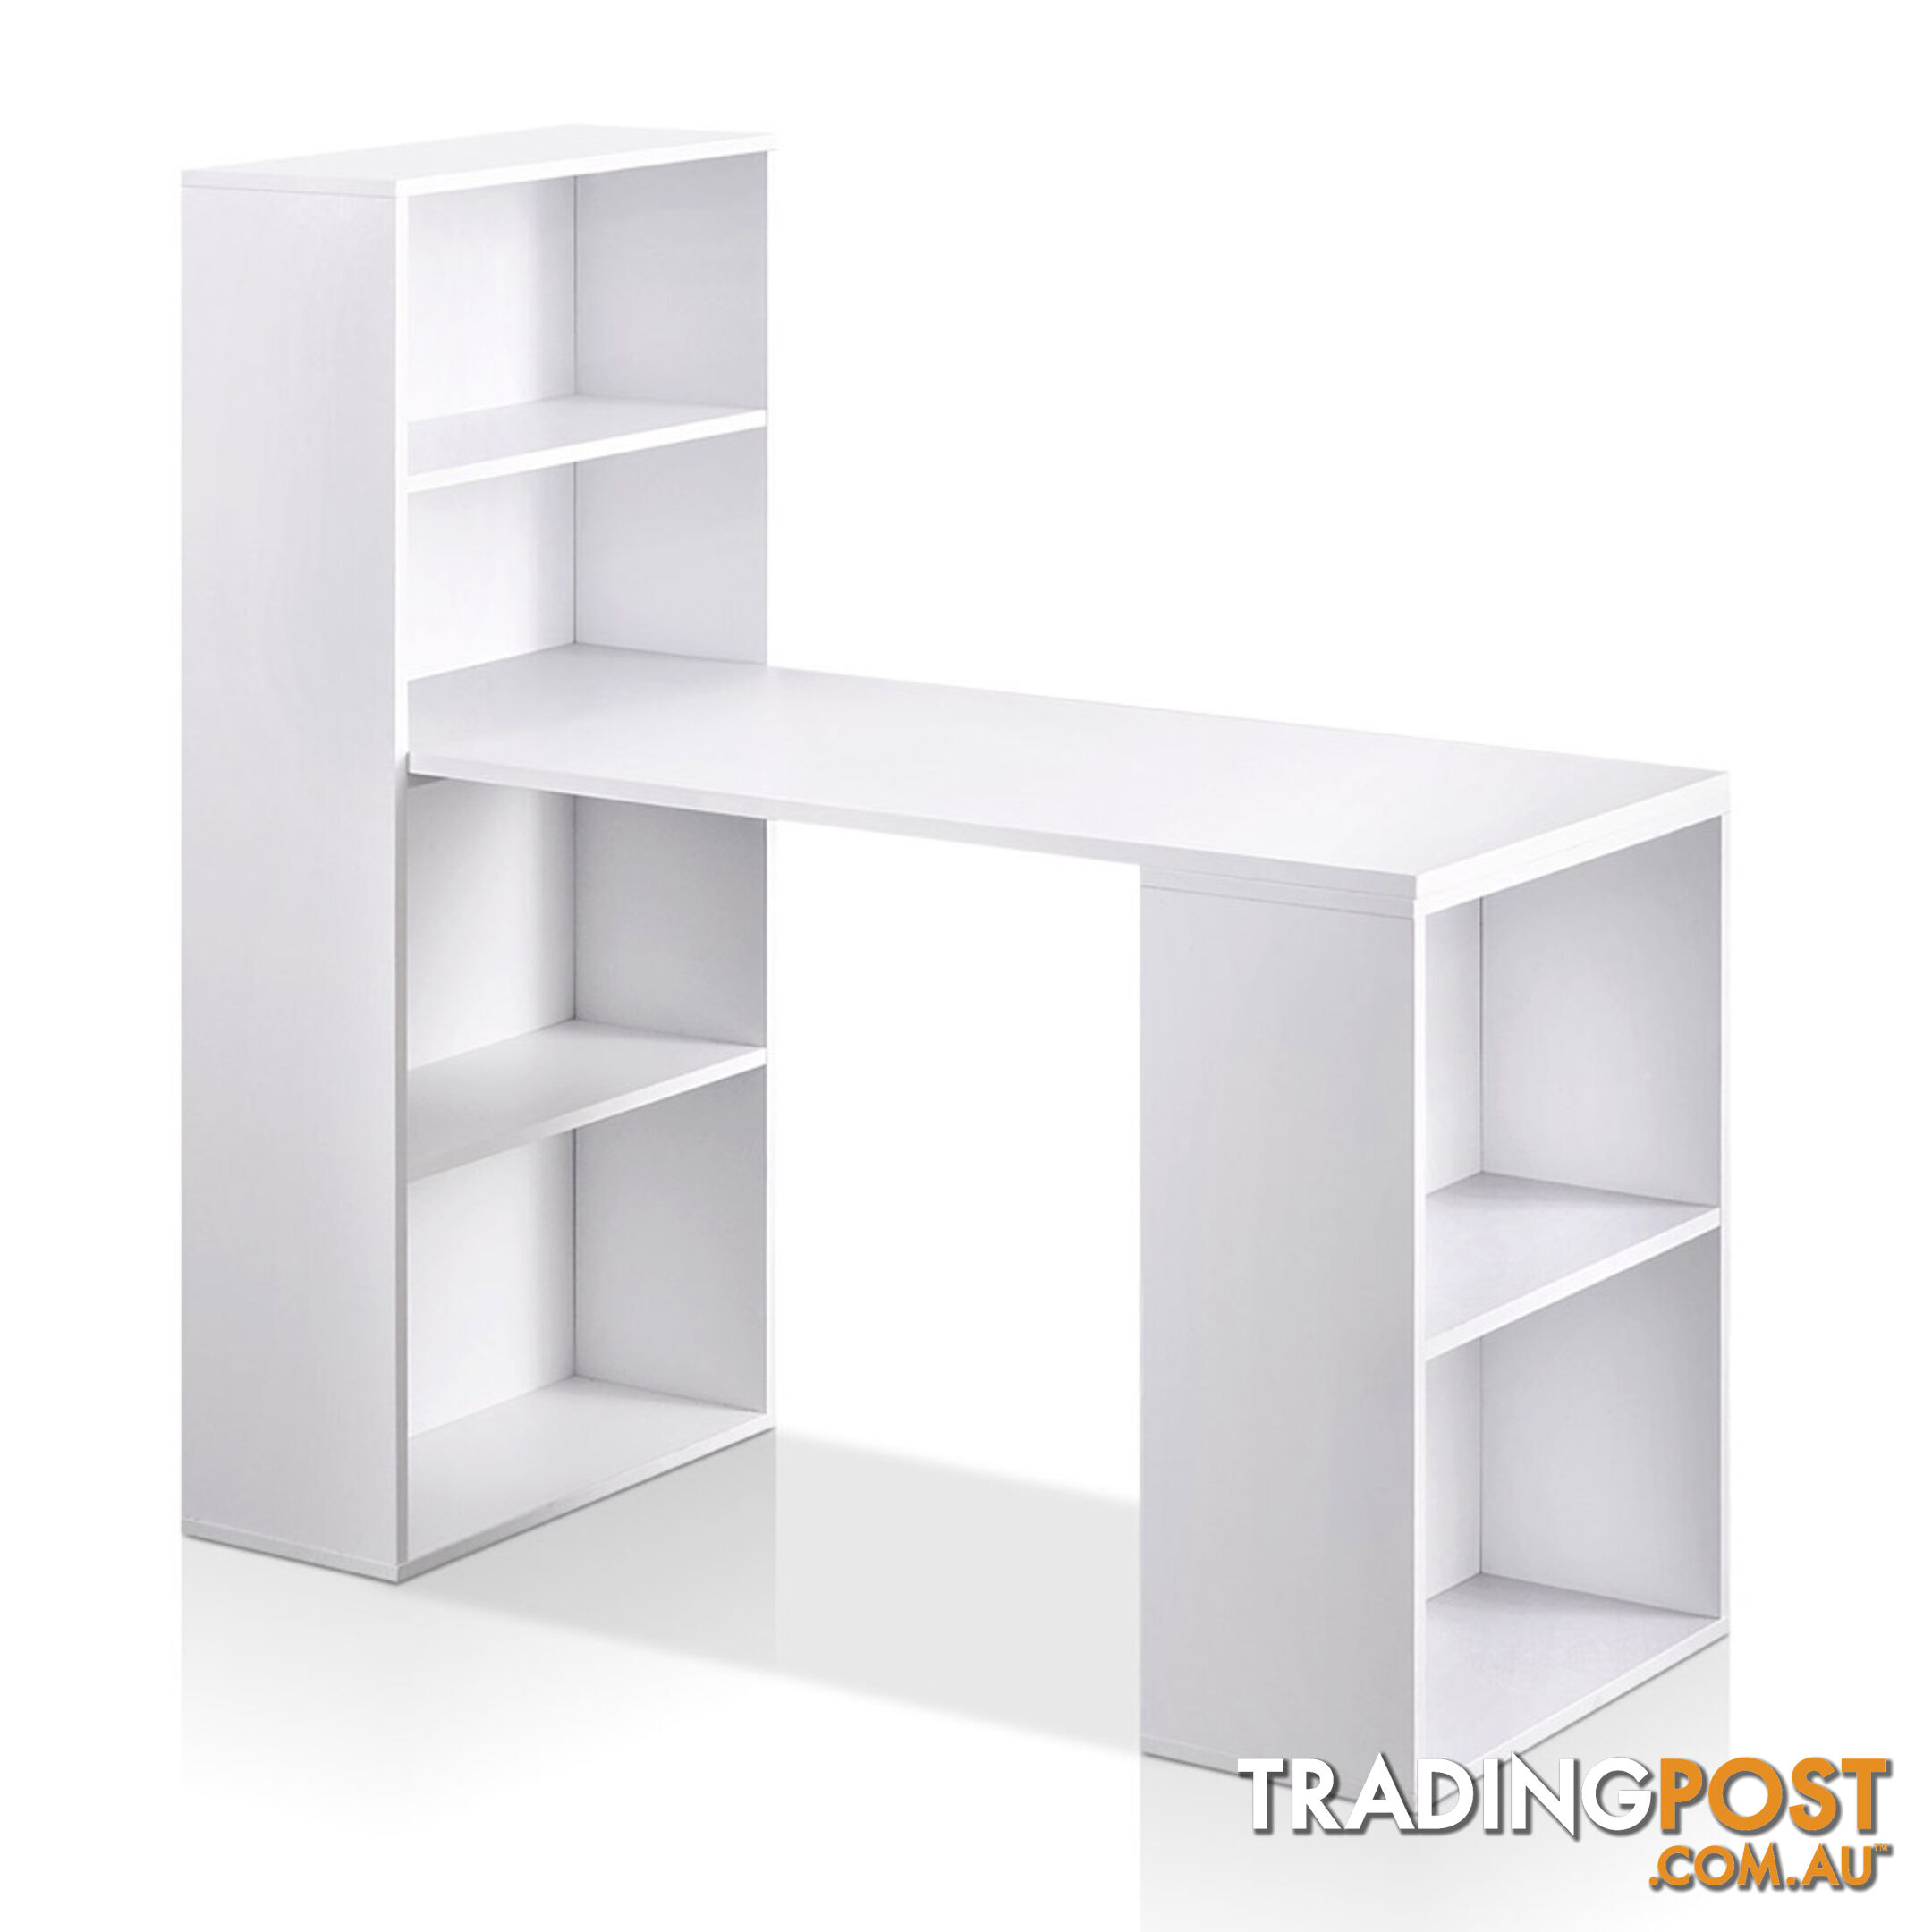 6 Storage Shelf Office Computer Desk White